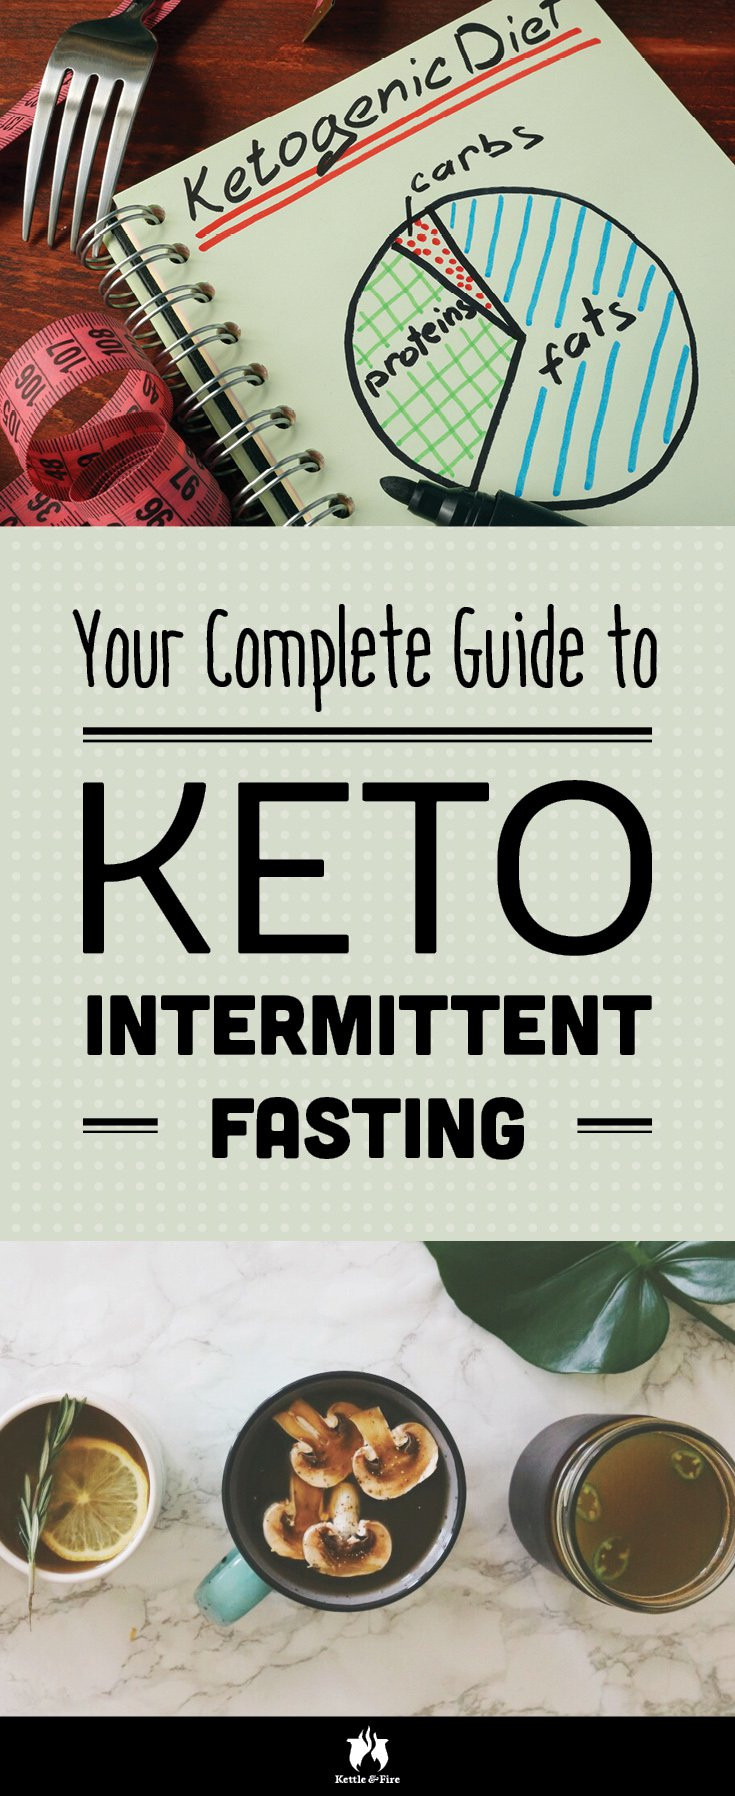 Keto Diet Intermittent Fasting
 Your plete Guide to Keto Intermittent Fasting